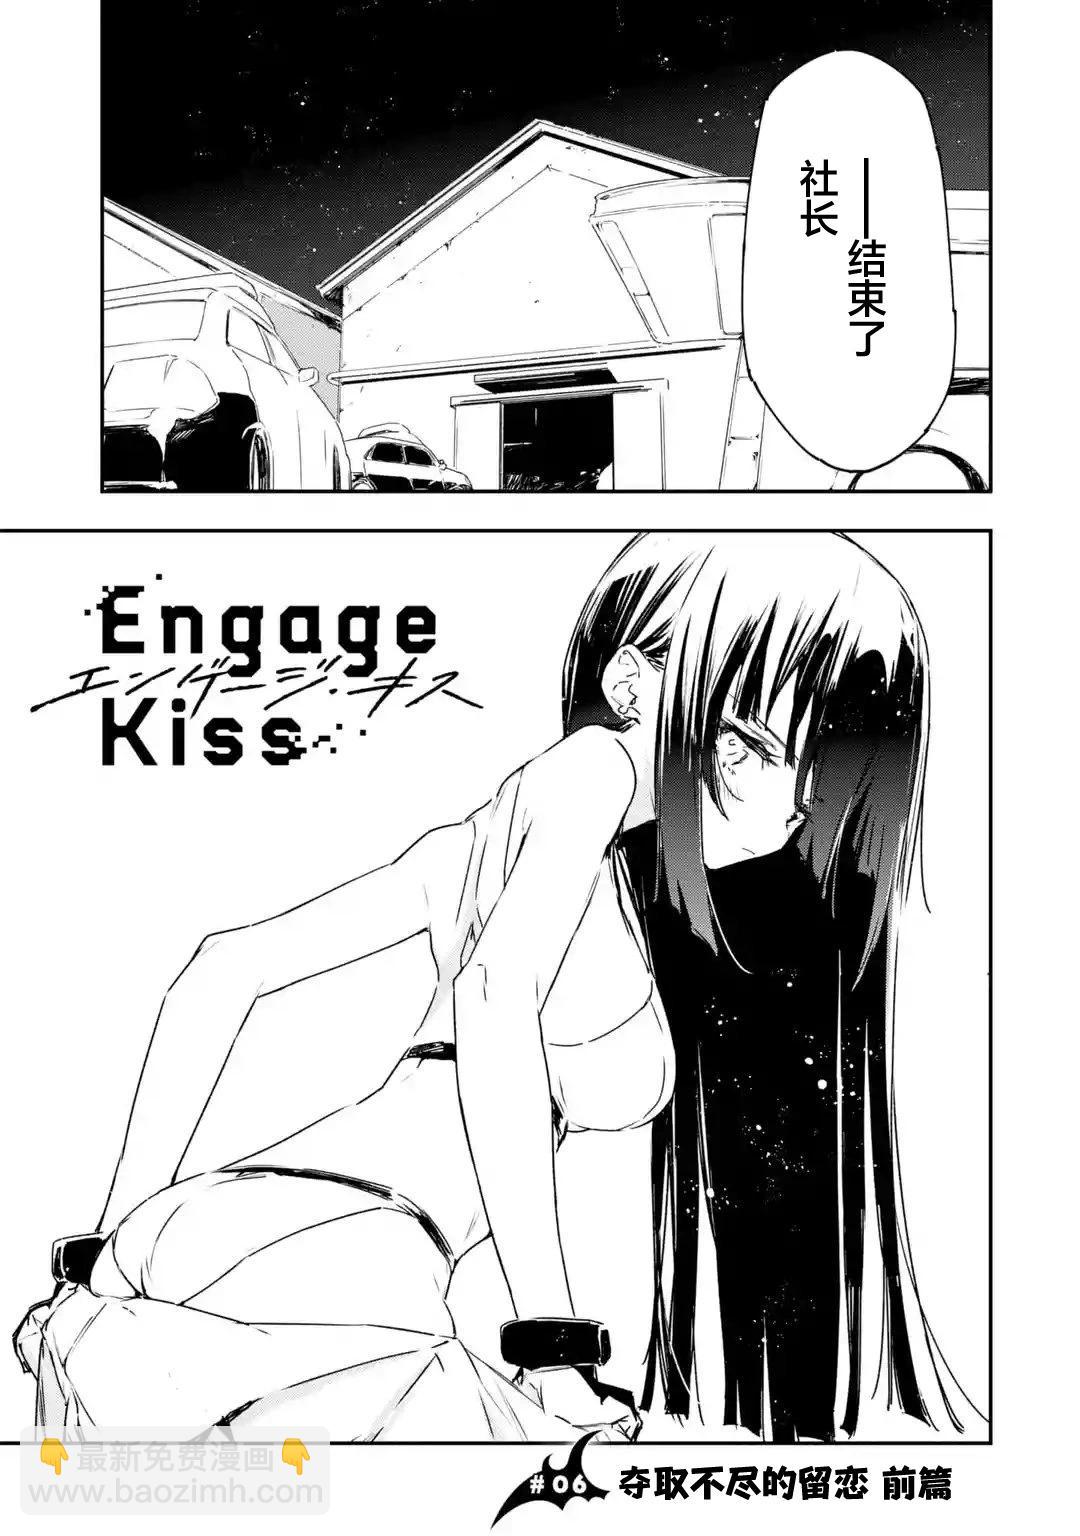 Engage Kiss - 第6.1話 - 2